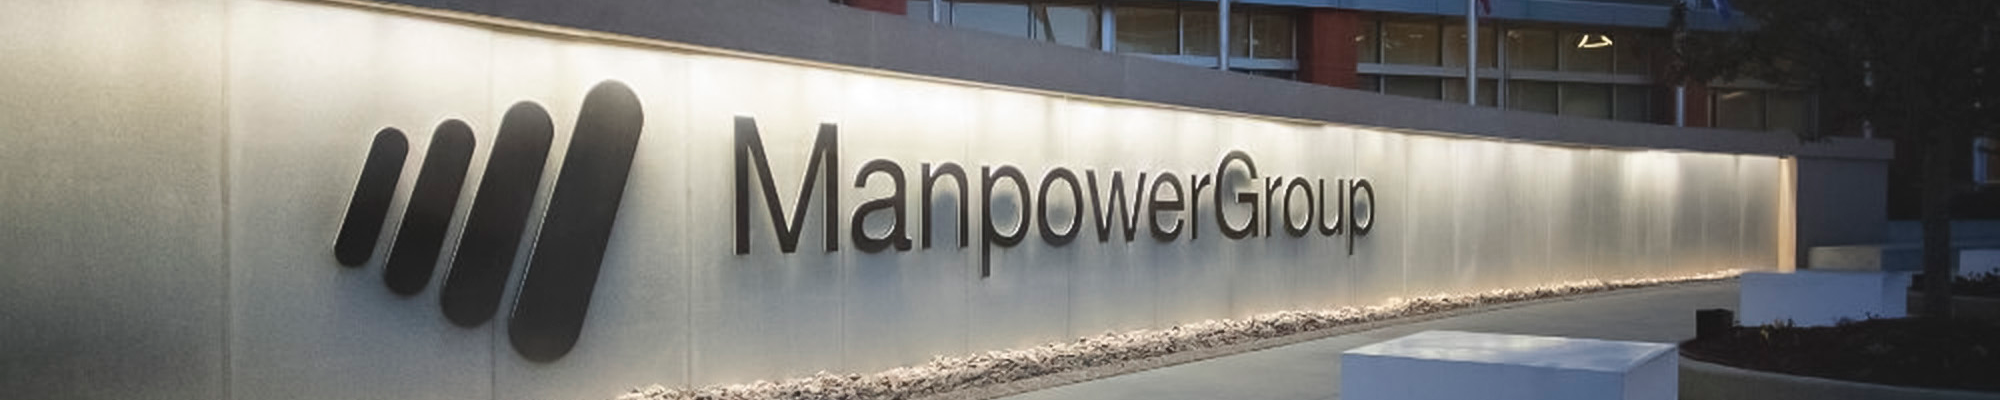 manpowergroup office facade